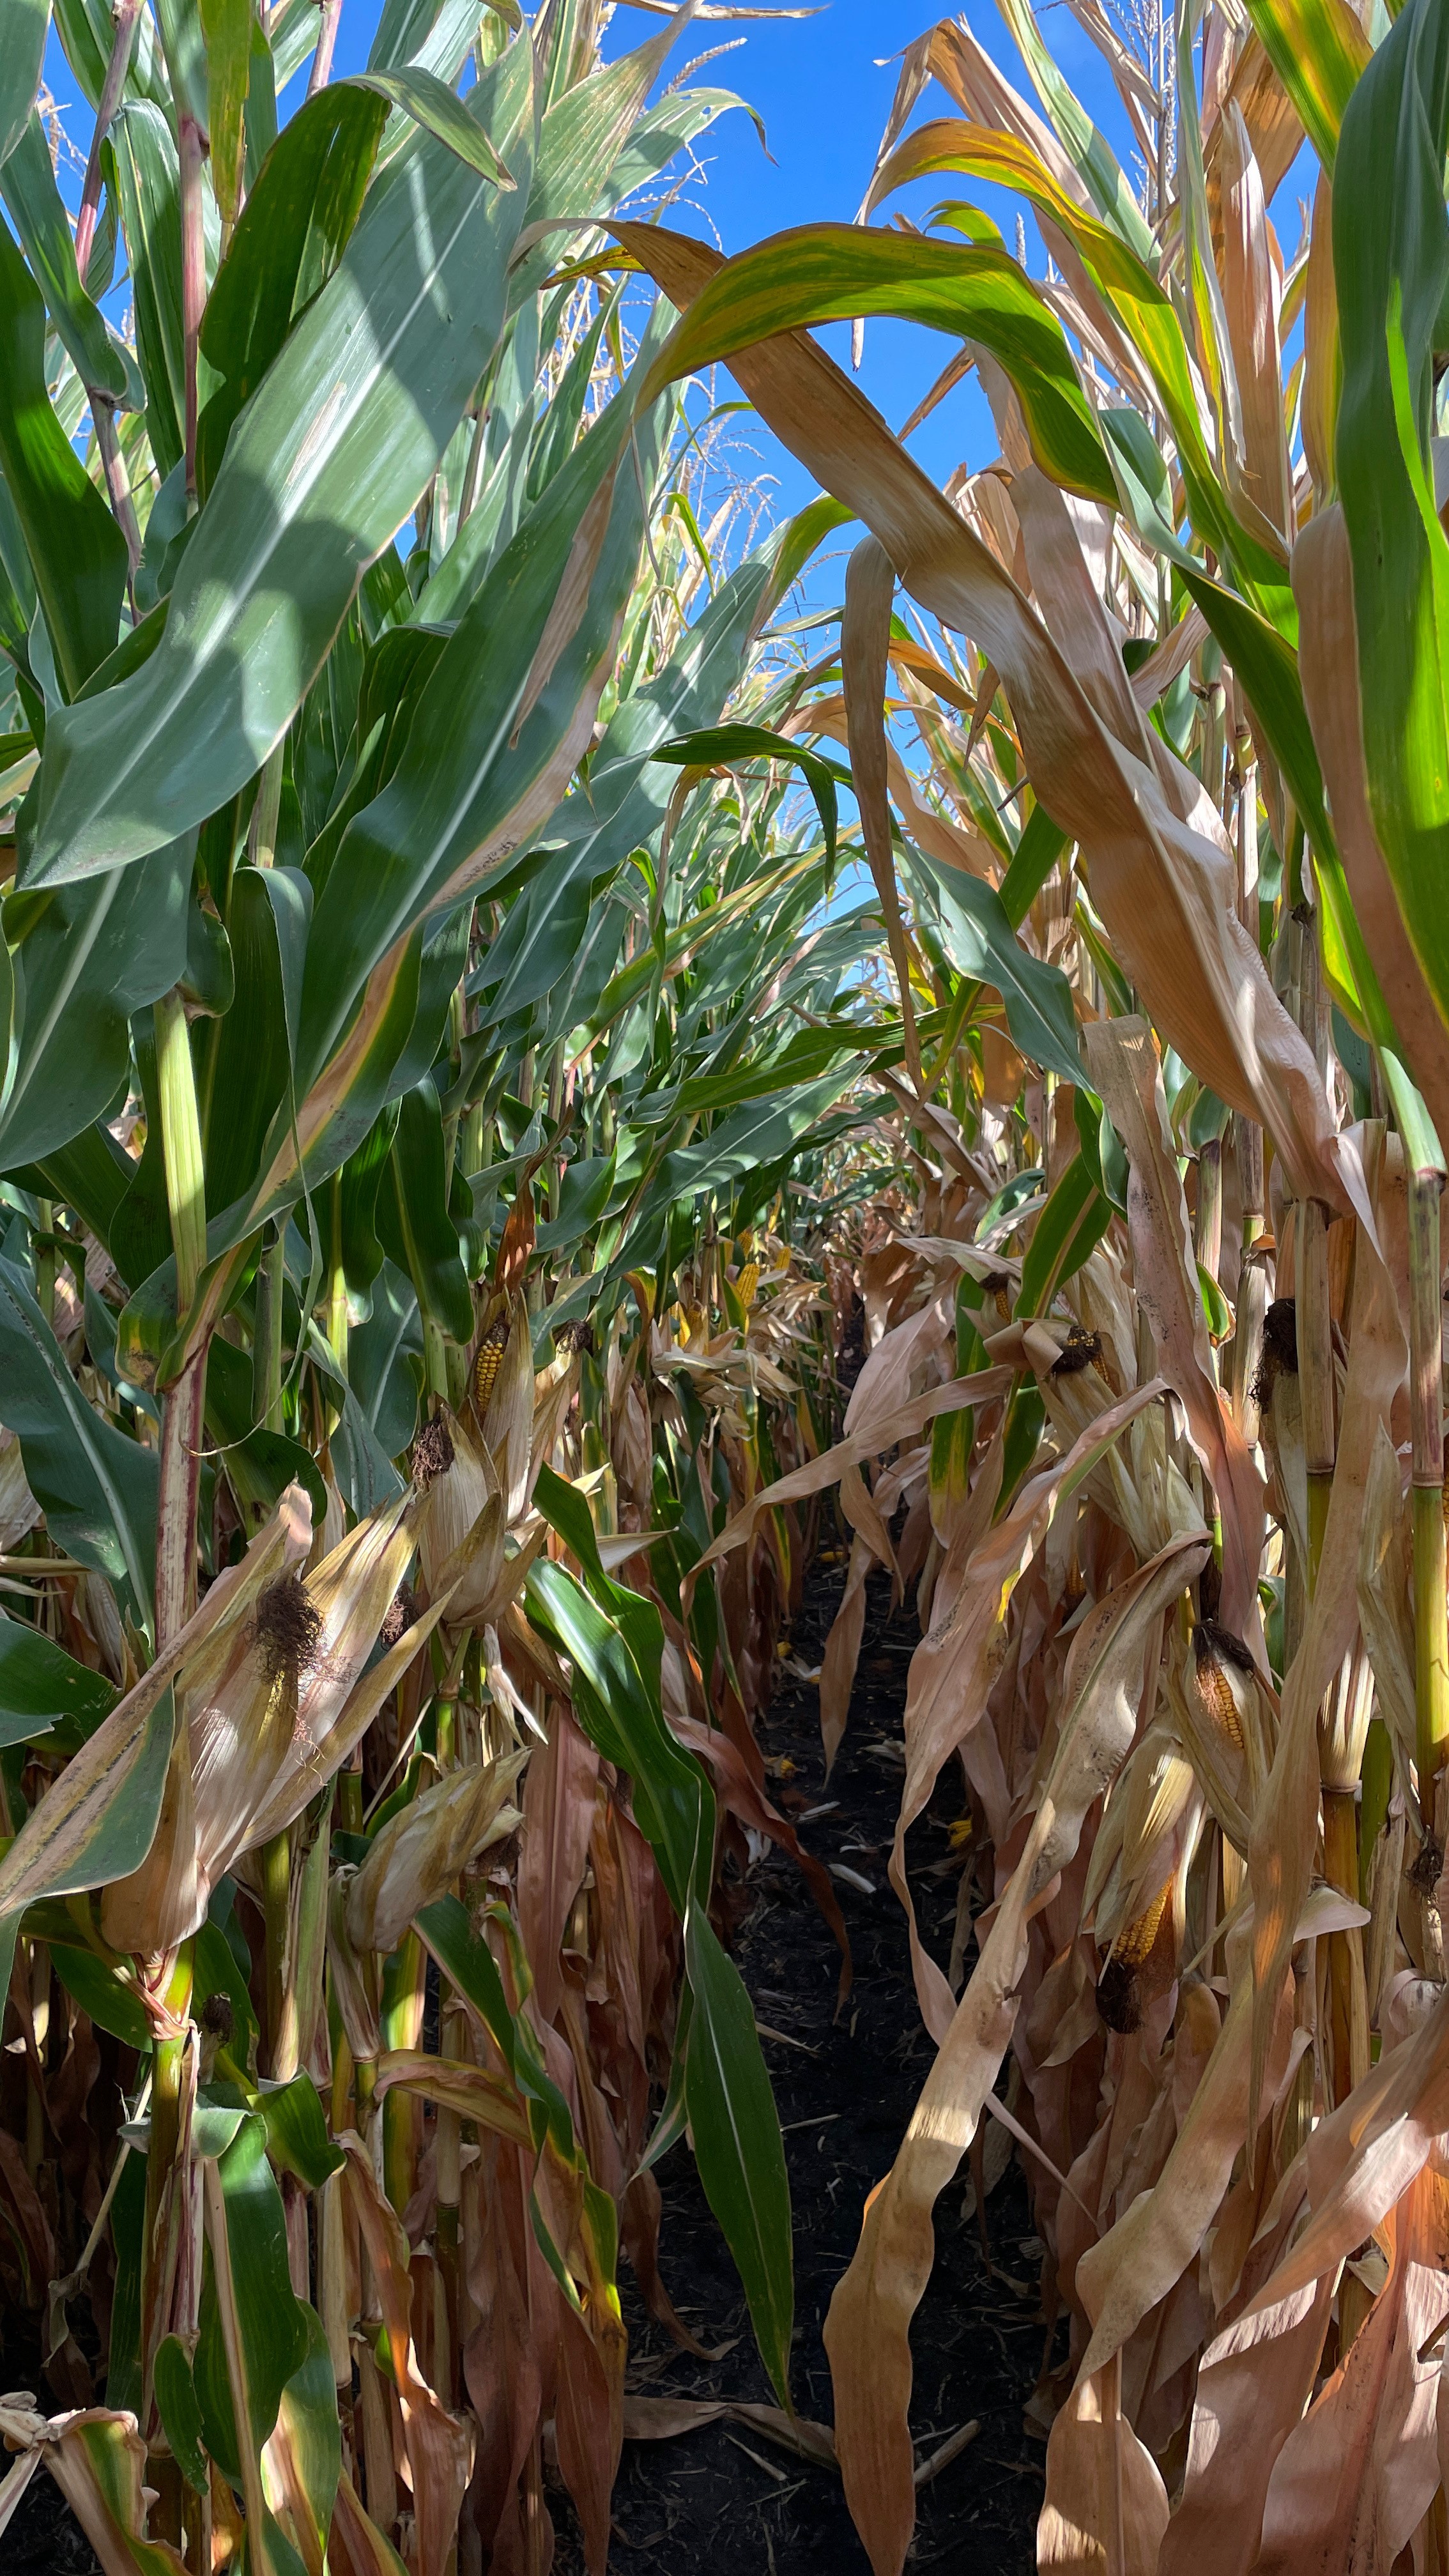 A LCG49C28 corn plant with impressive stalk quality next to struggling corn plant